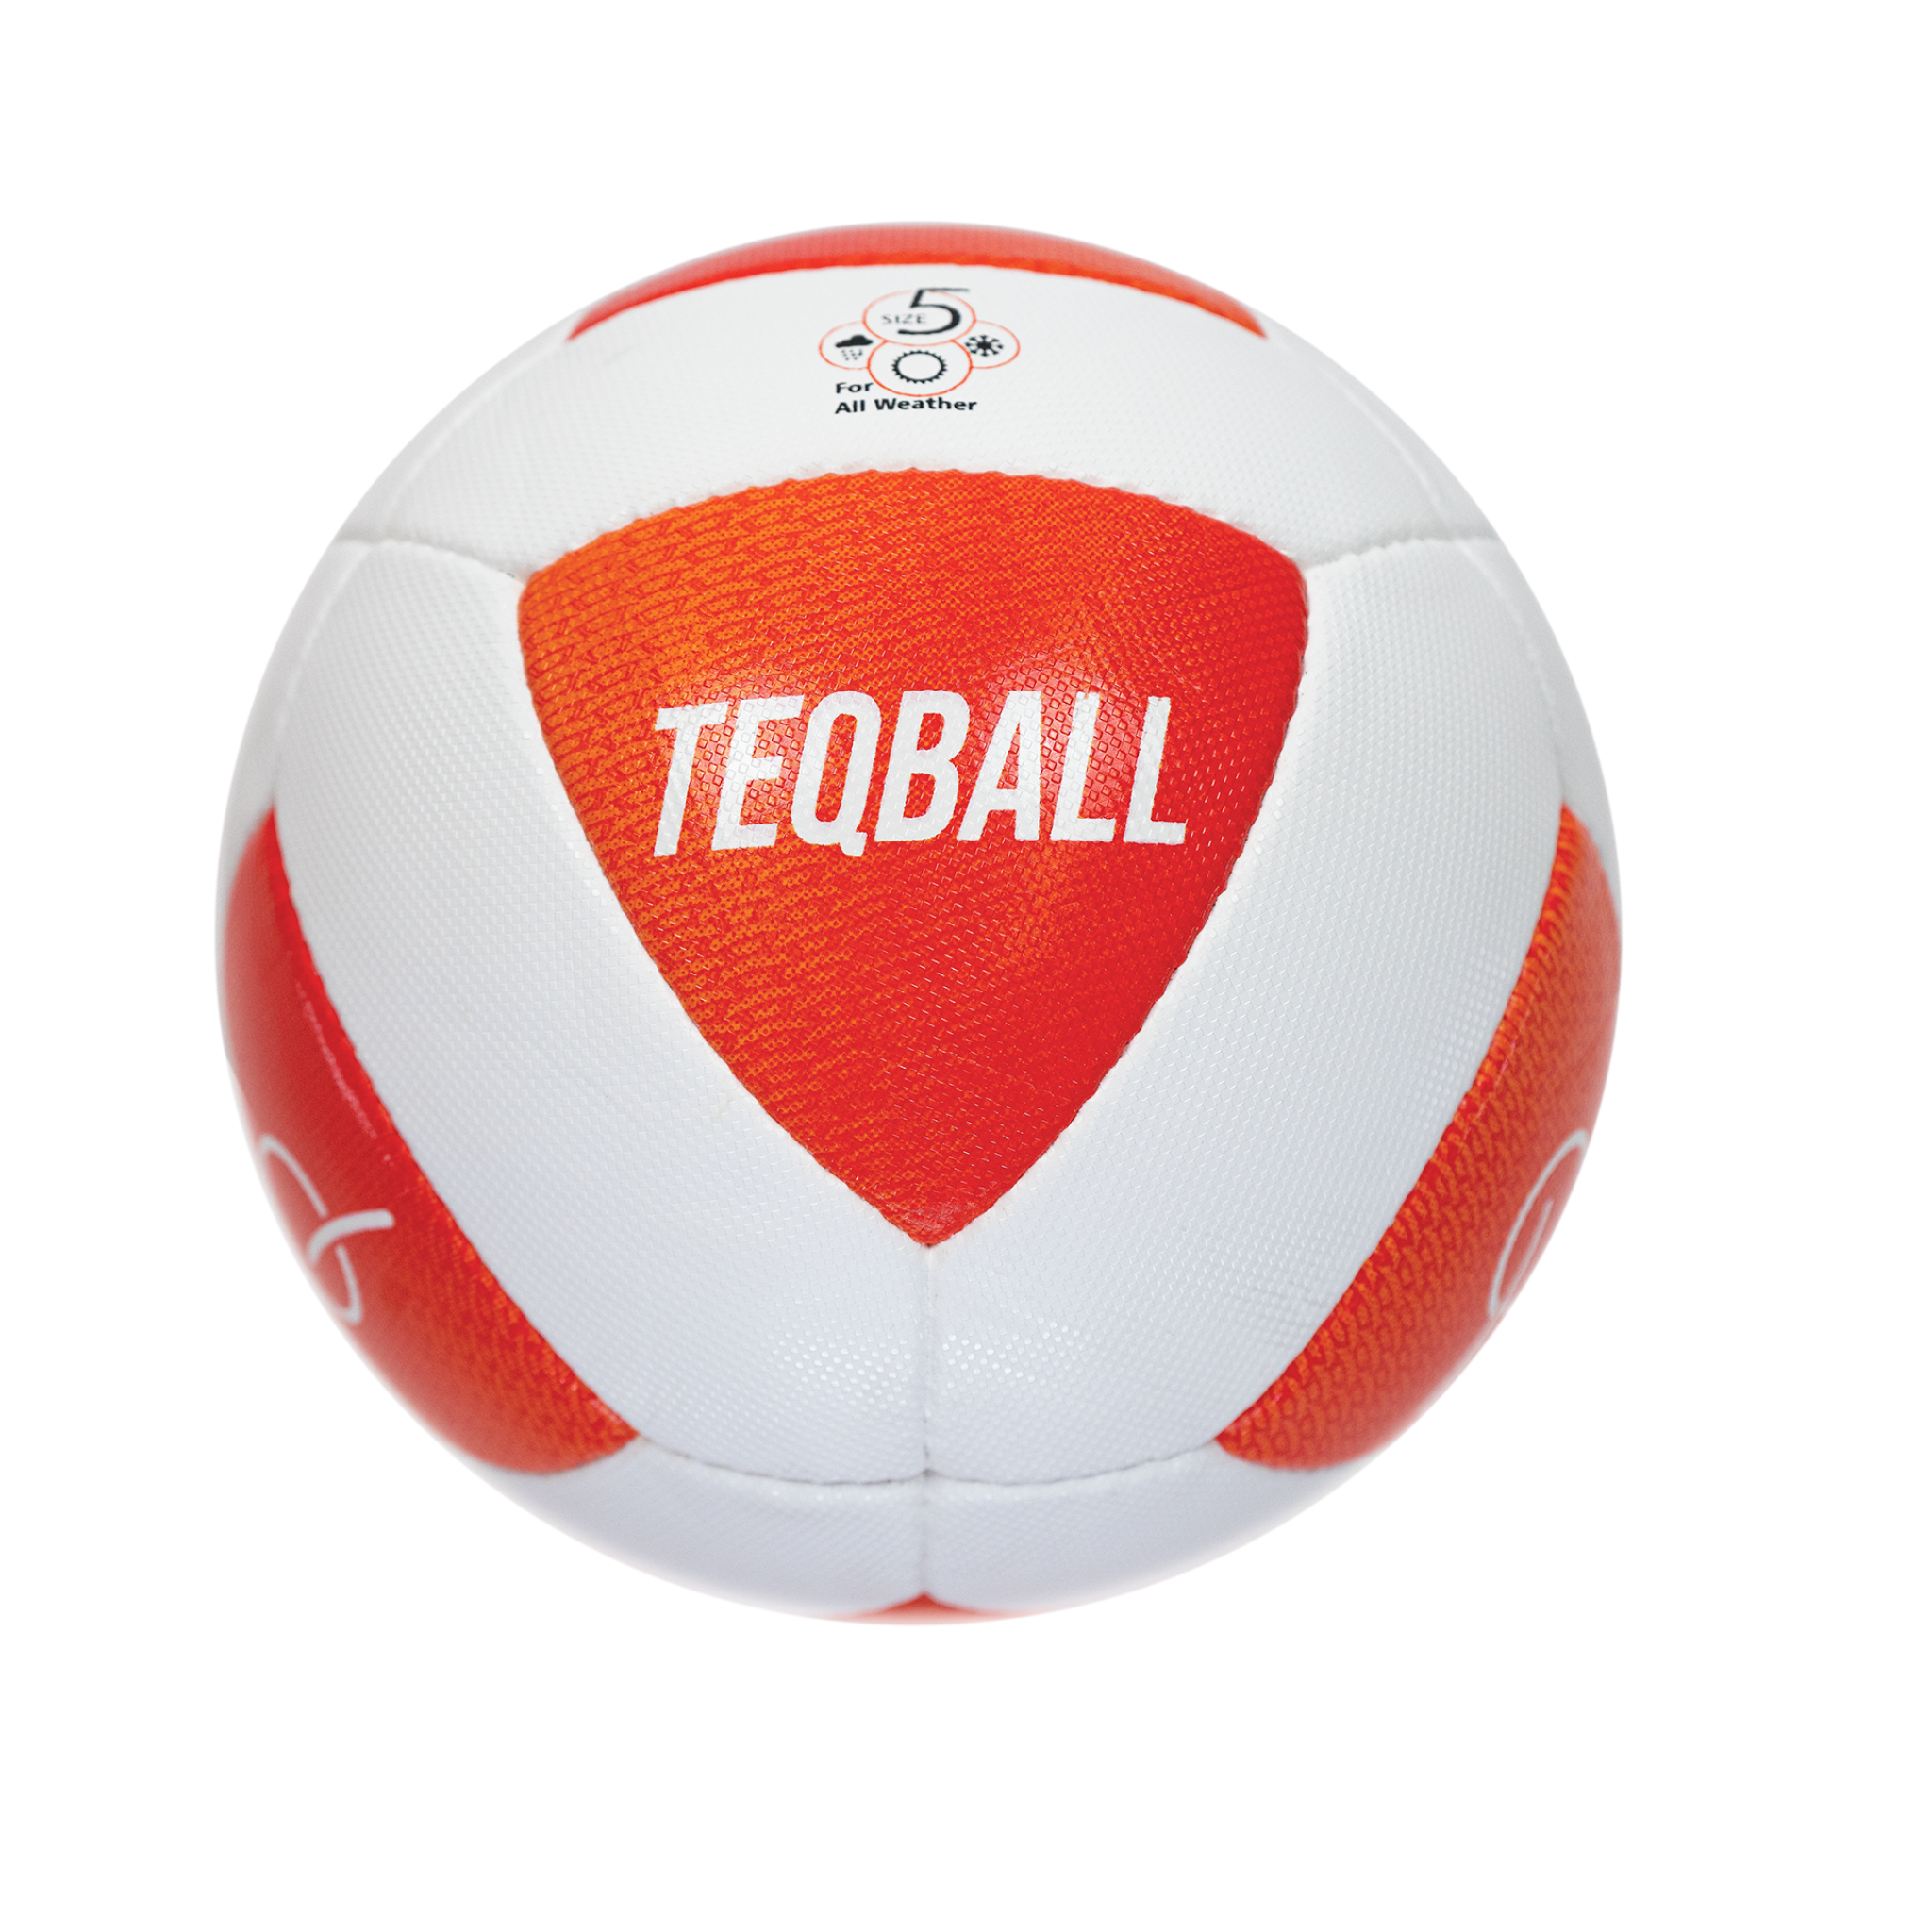 Teqball TEQ LITE Free Official Teqball ball offer